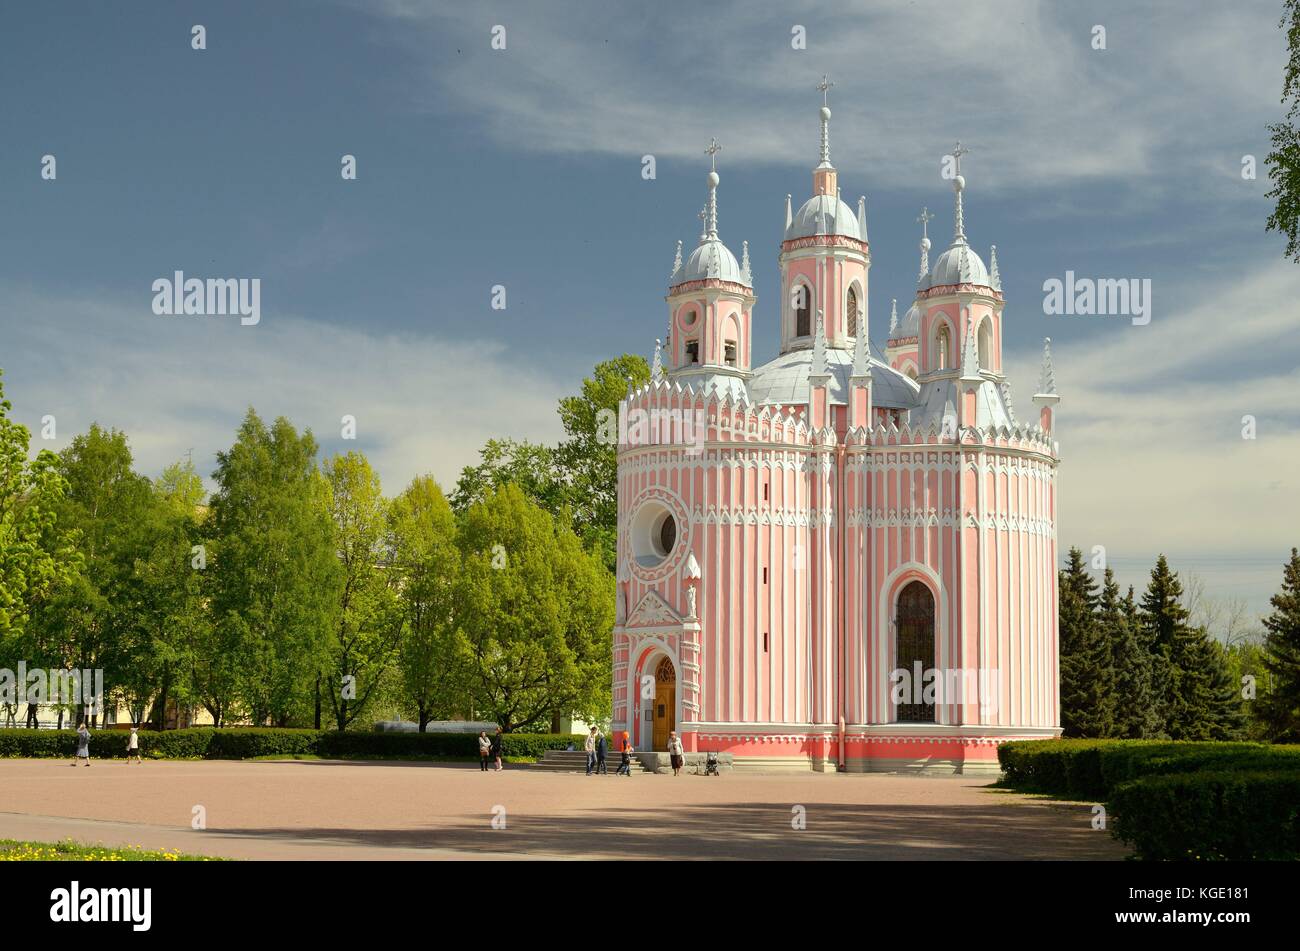 Rusia.paisaje con iglesia.chesme iglesia - activa en el templo ortodoxo de San Petersburgo. Foto de stock